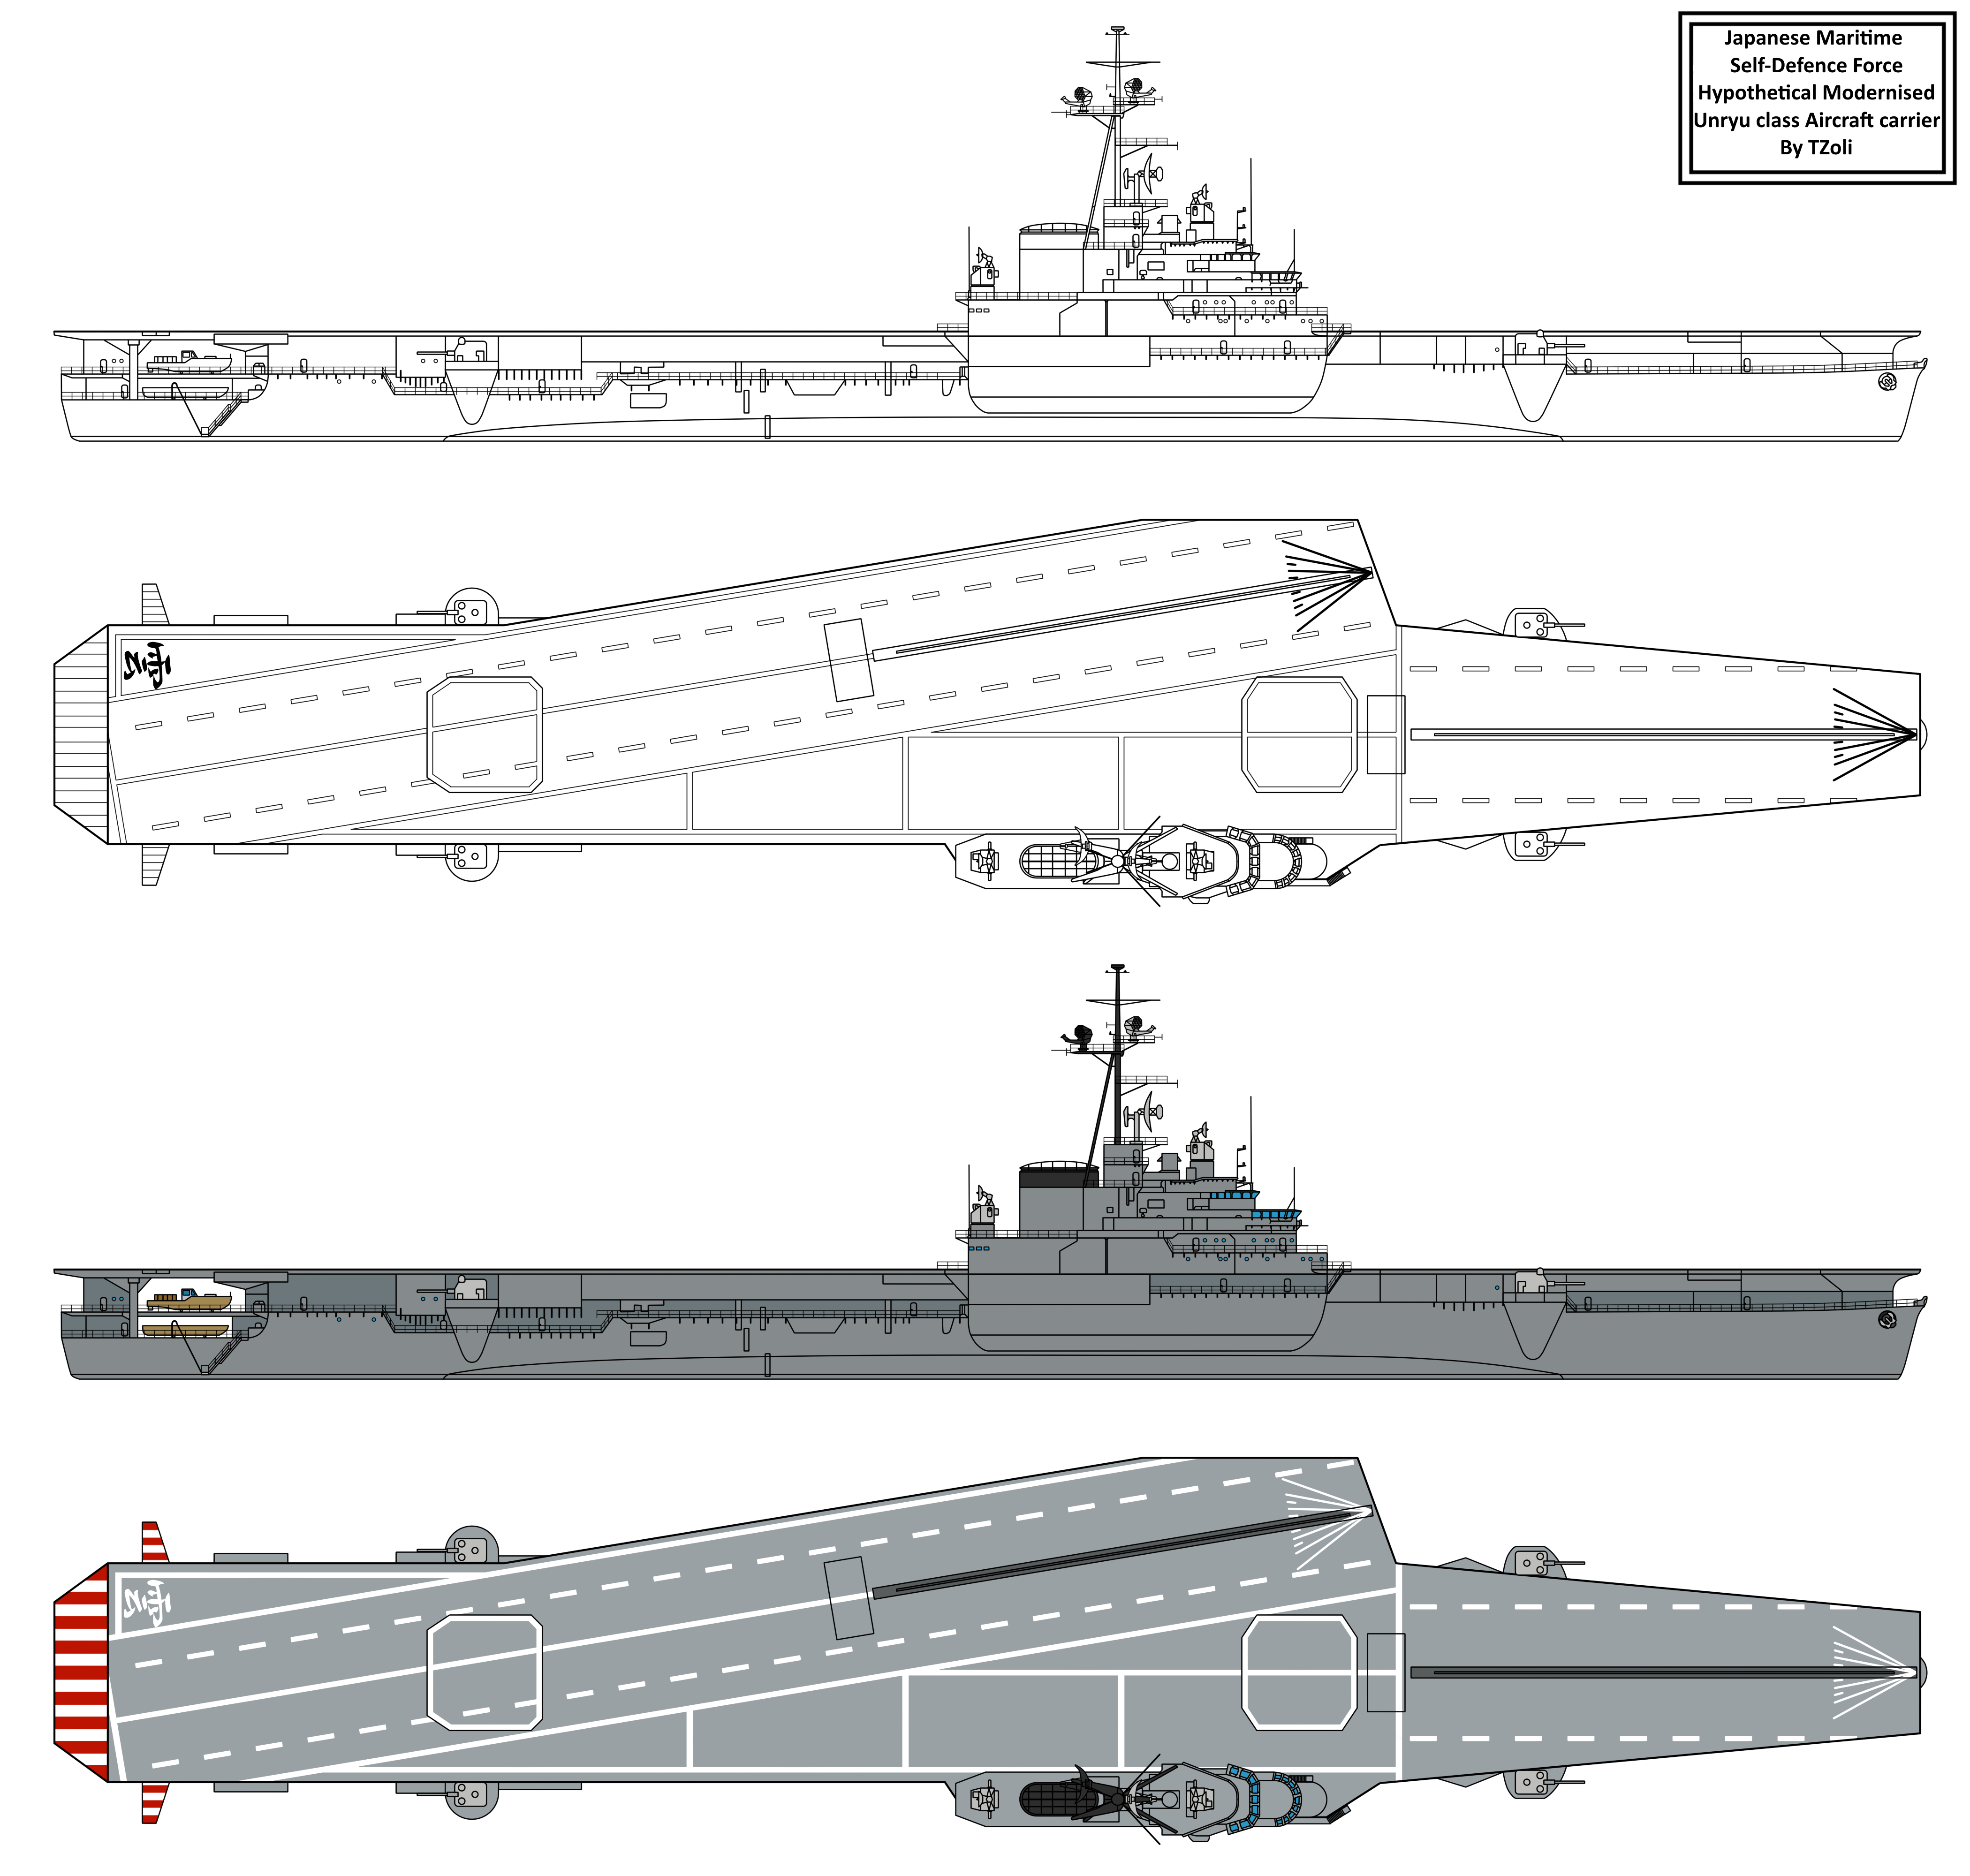 modernised_unryu_class_aircraft_carrier_by_tzoli-d9tbu8c.png